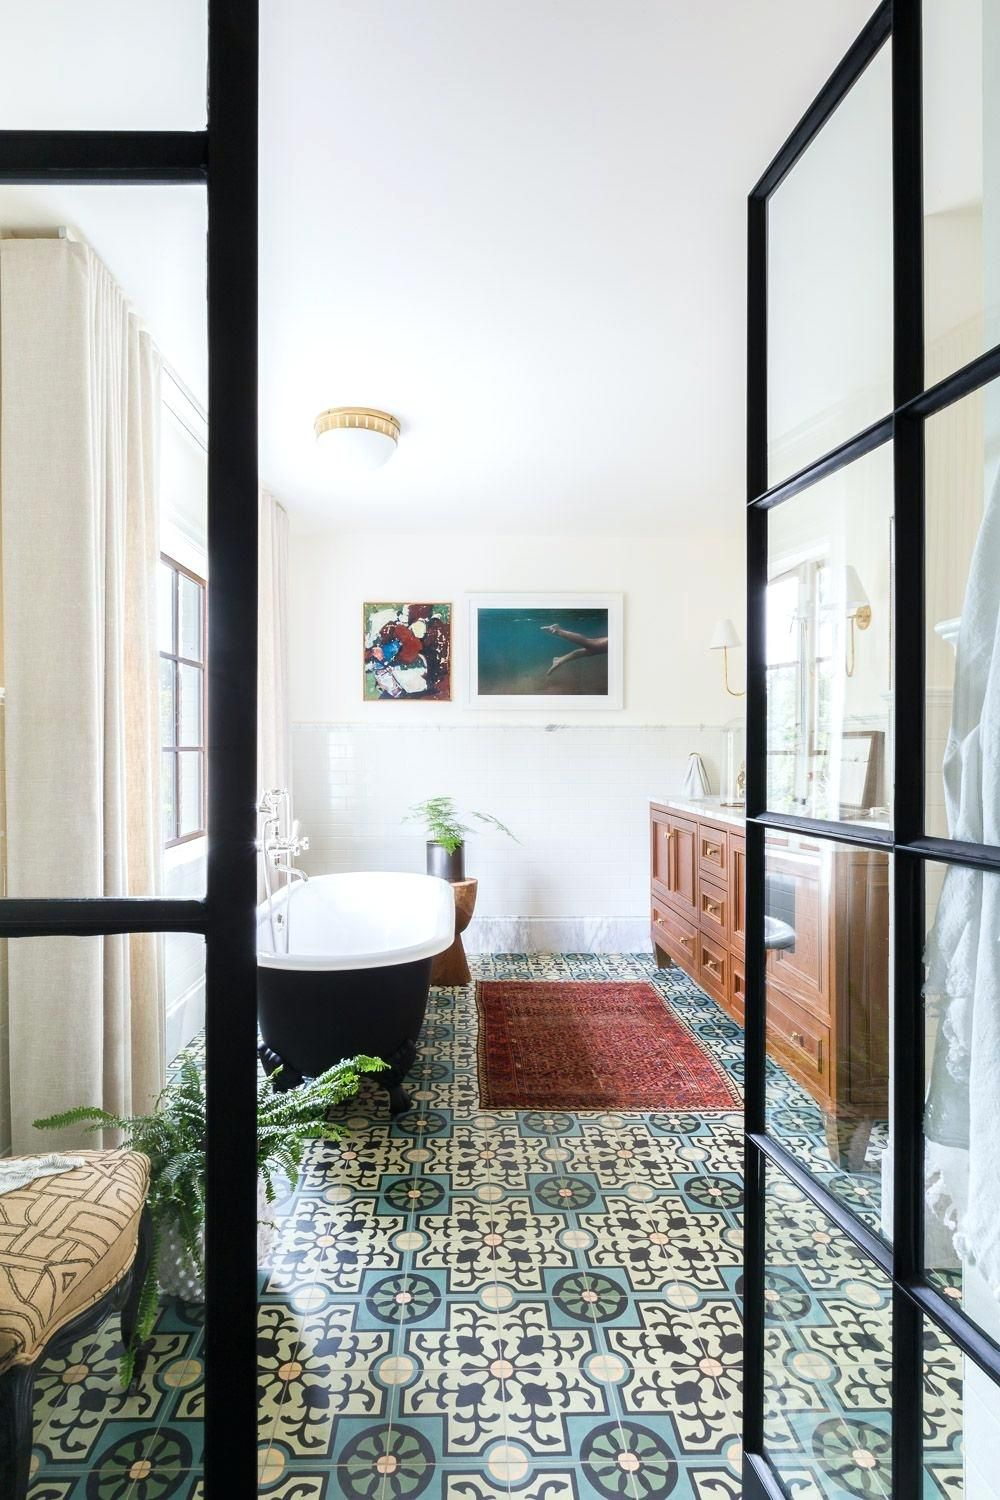 10 Wonderful Tile Flooring Ideas For Bathroom 33 bathroom tile design ideas tiles for floor showers and walls 2022